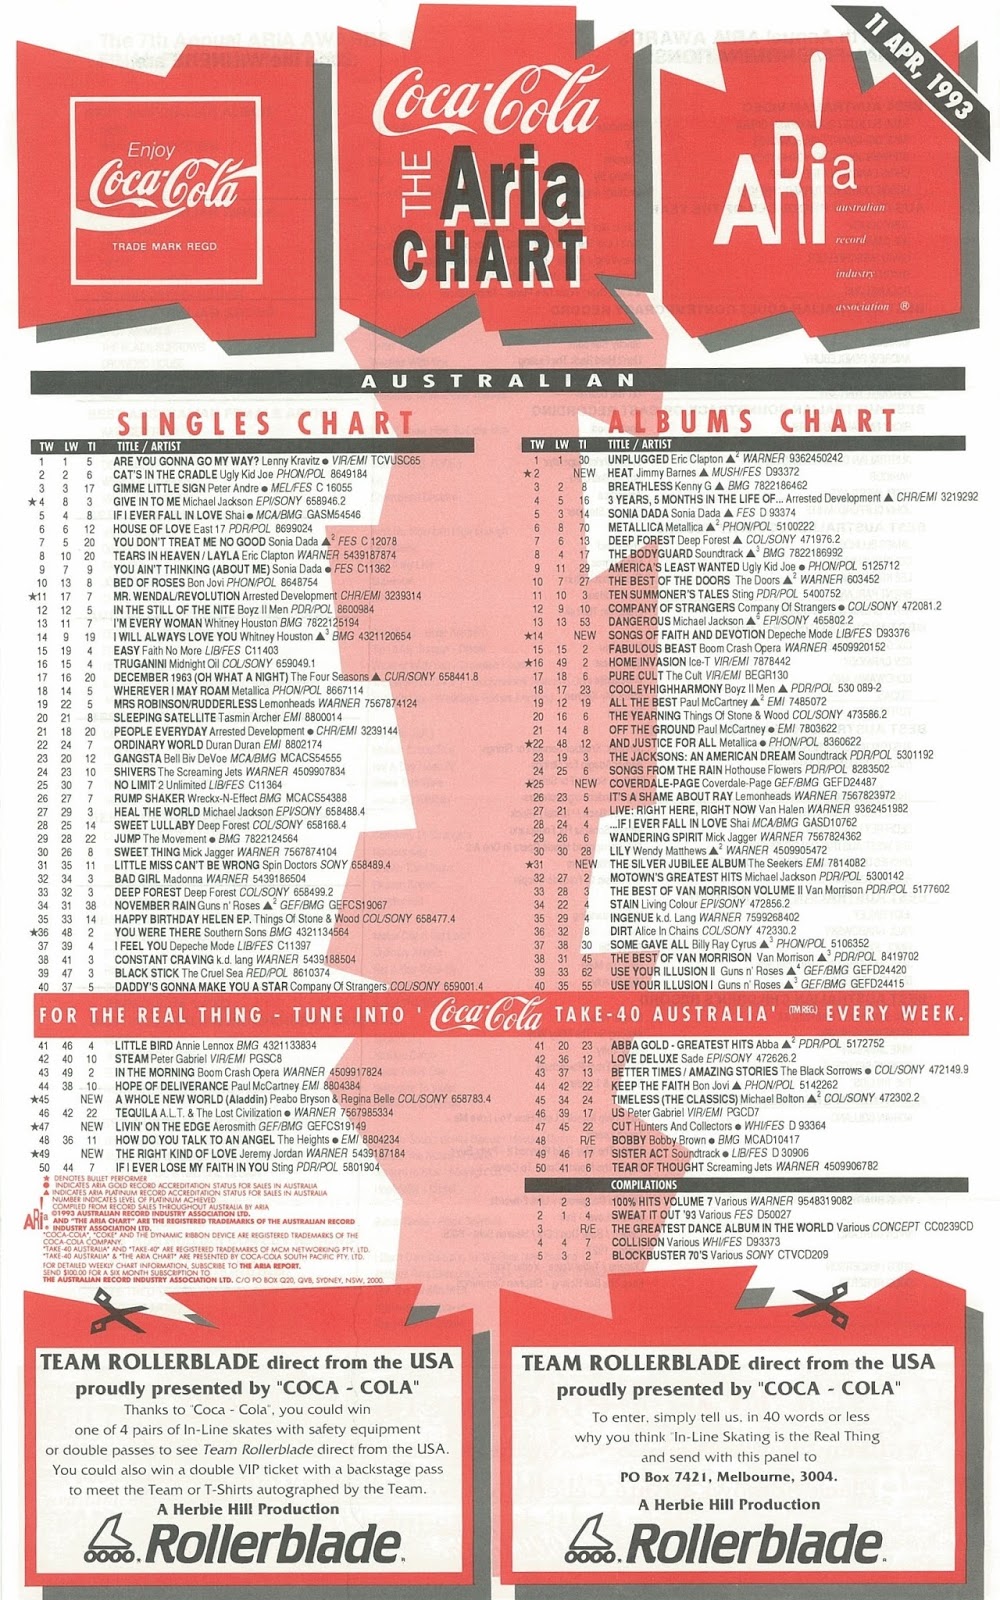 Australian Music Charts 1976